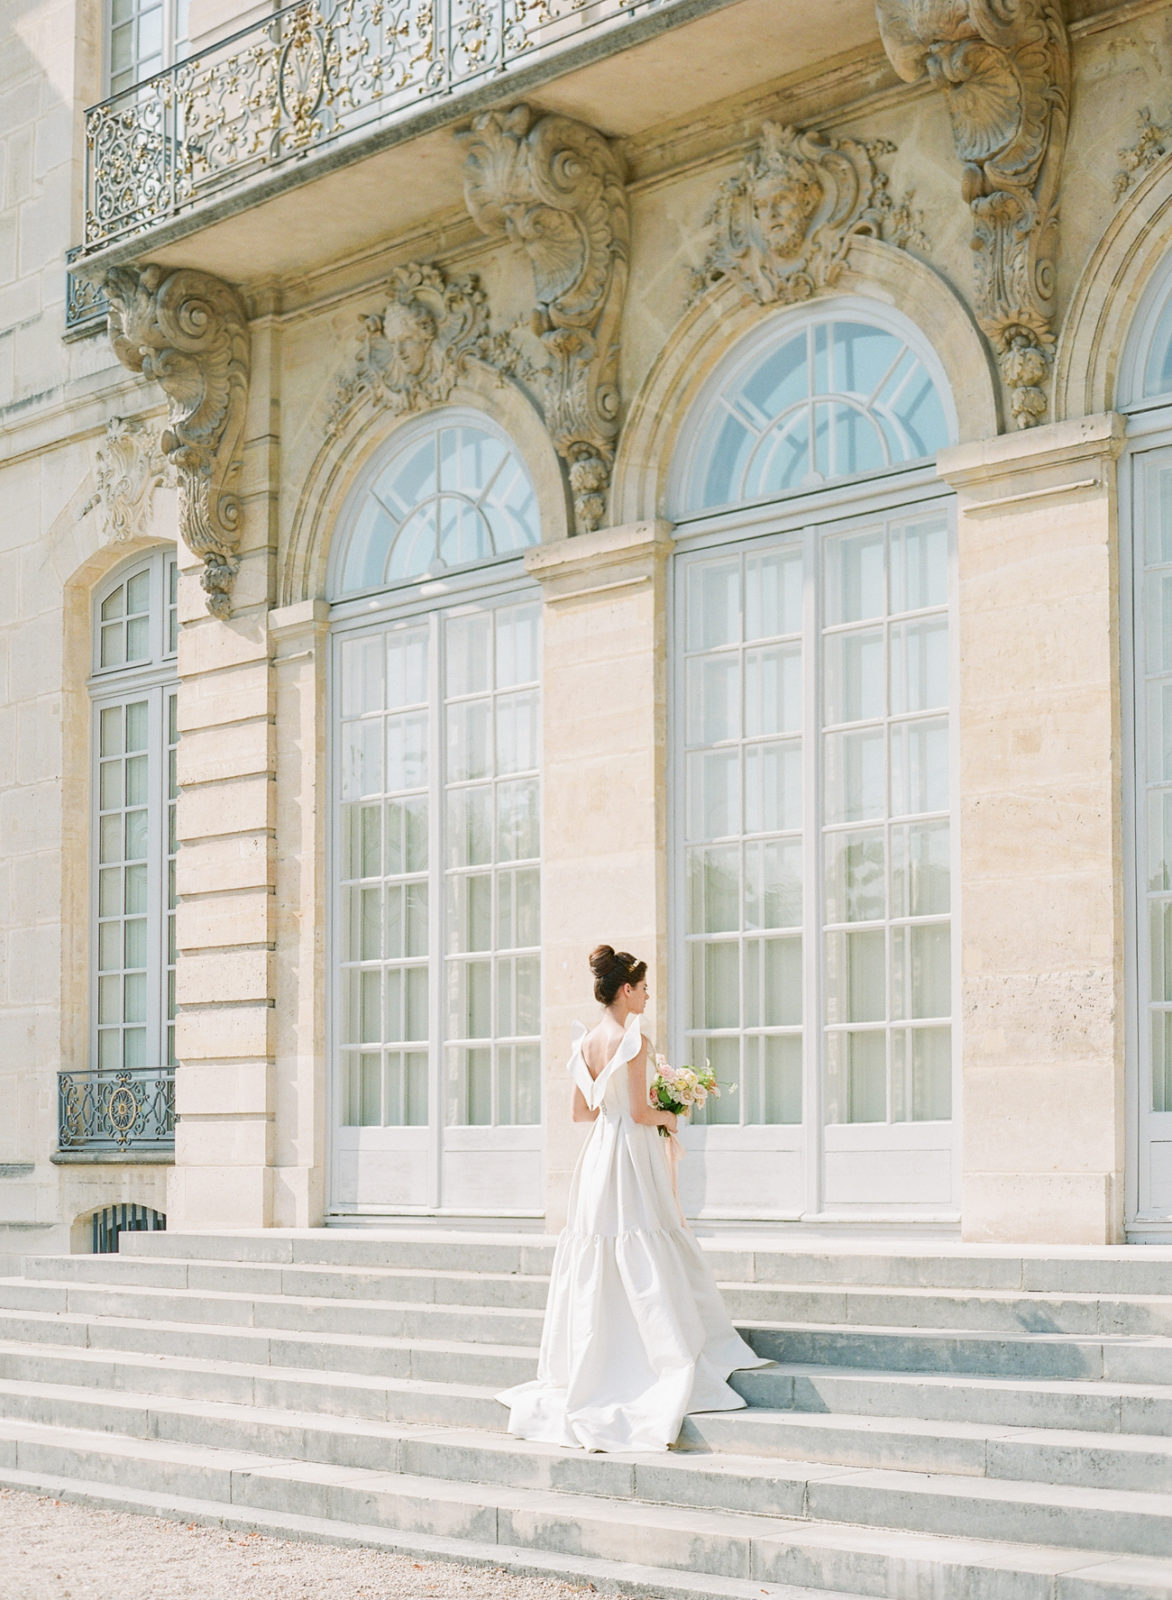 Musee Rodin Wedding Photographer | Paris Garden Wedding Photography | Paris Film Photographer | France Wedding Photography | Molly Carr Photography